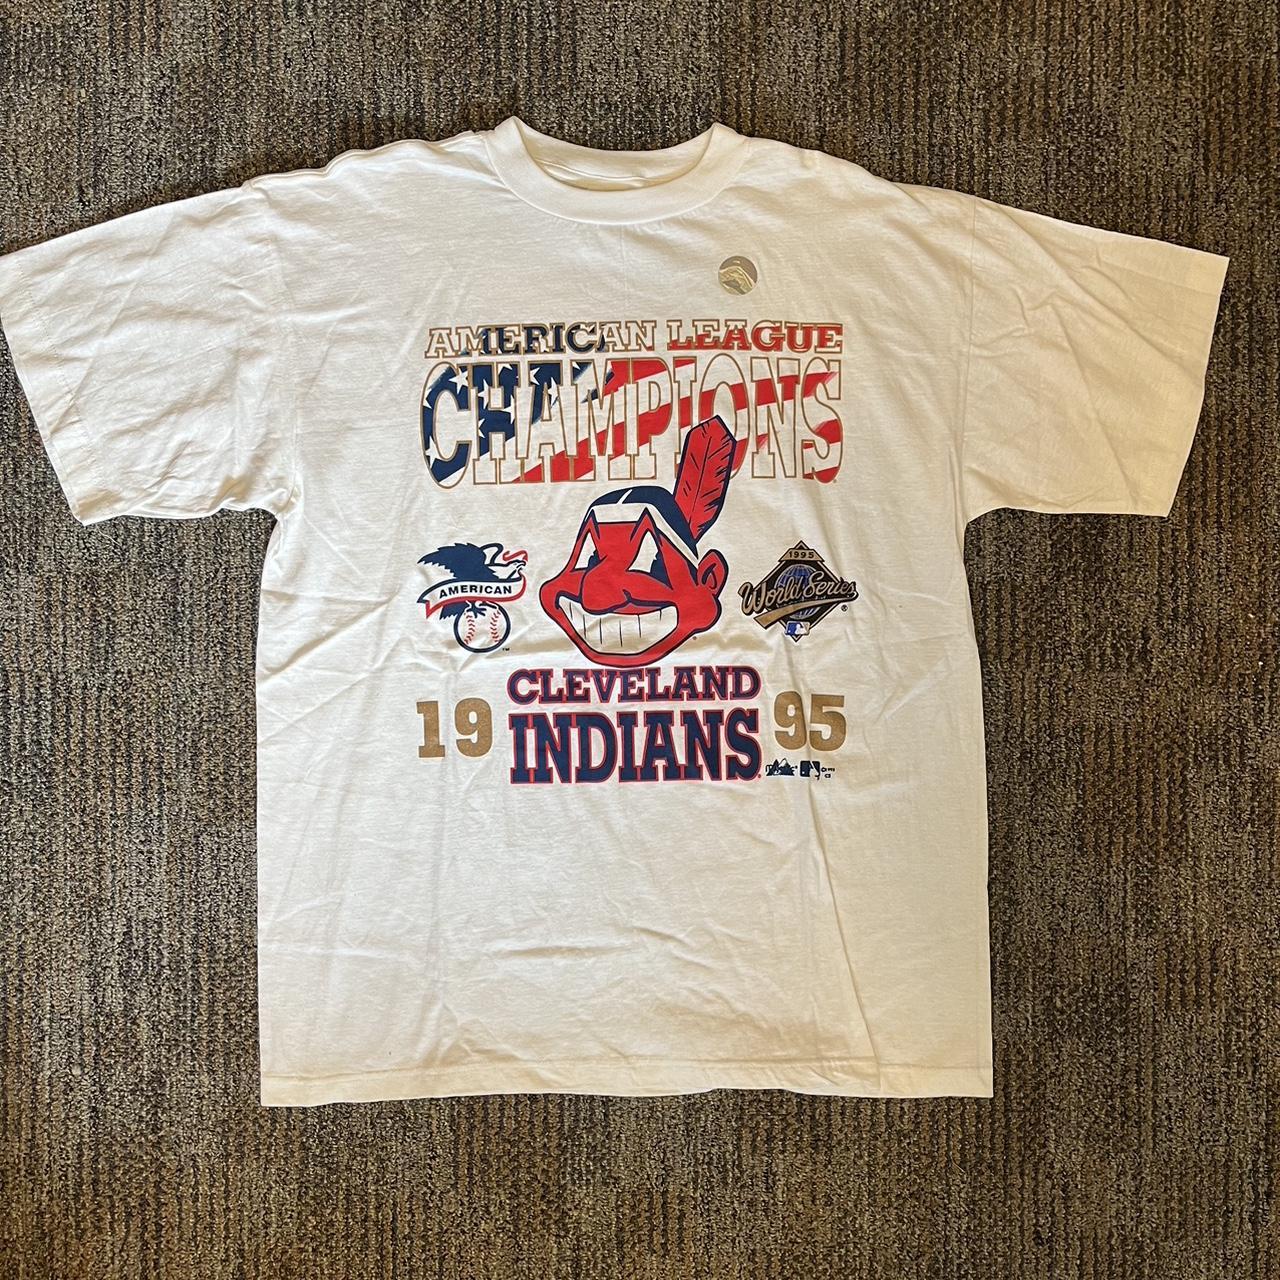 RARE VTG 1995 Cleveland Indians T-Shirt World Series American